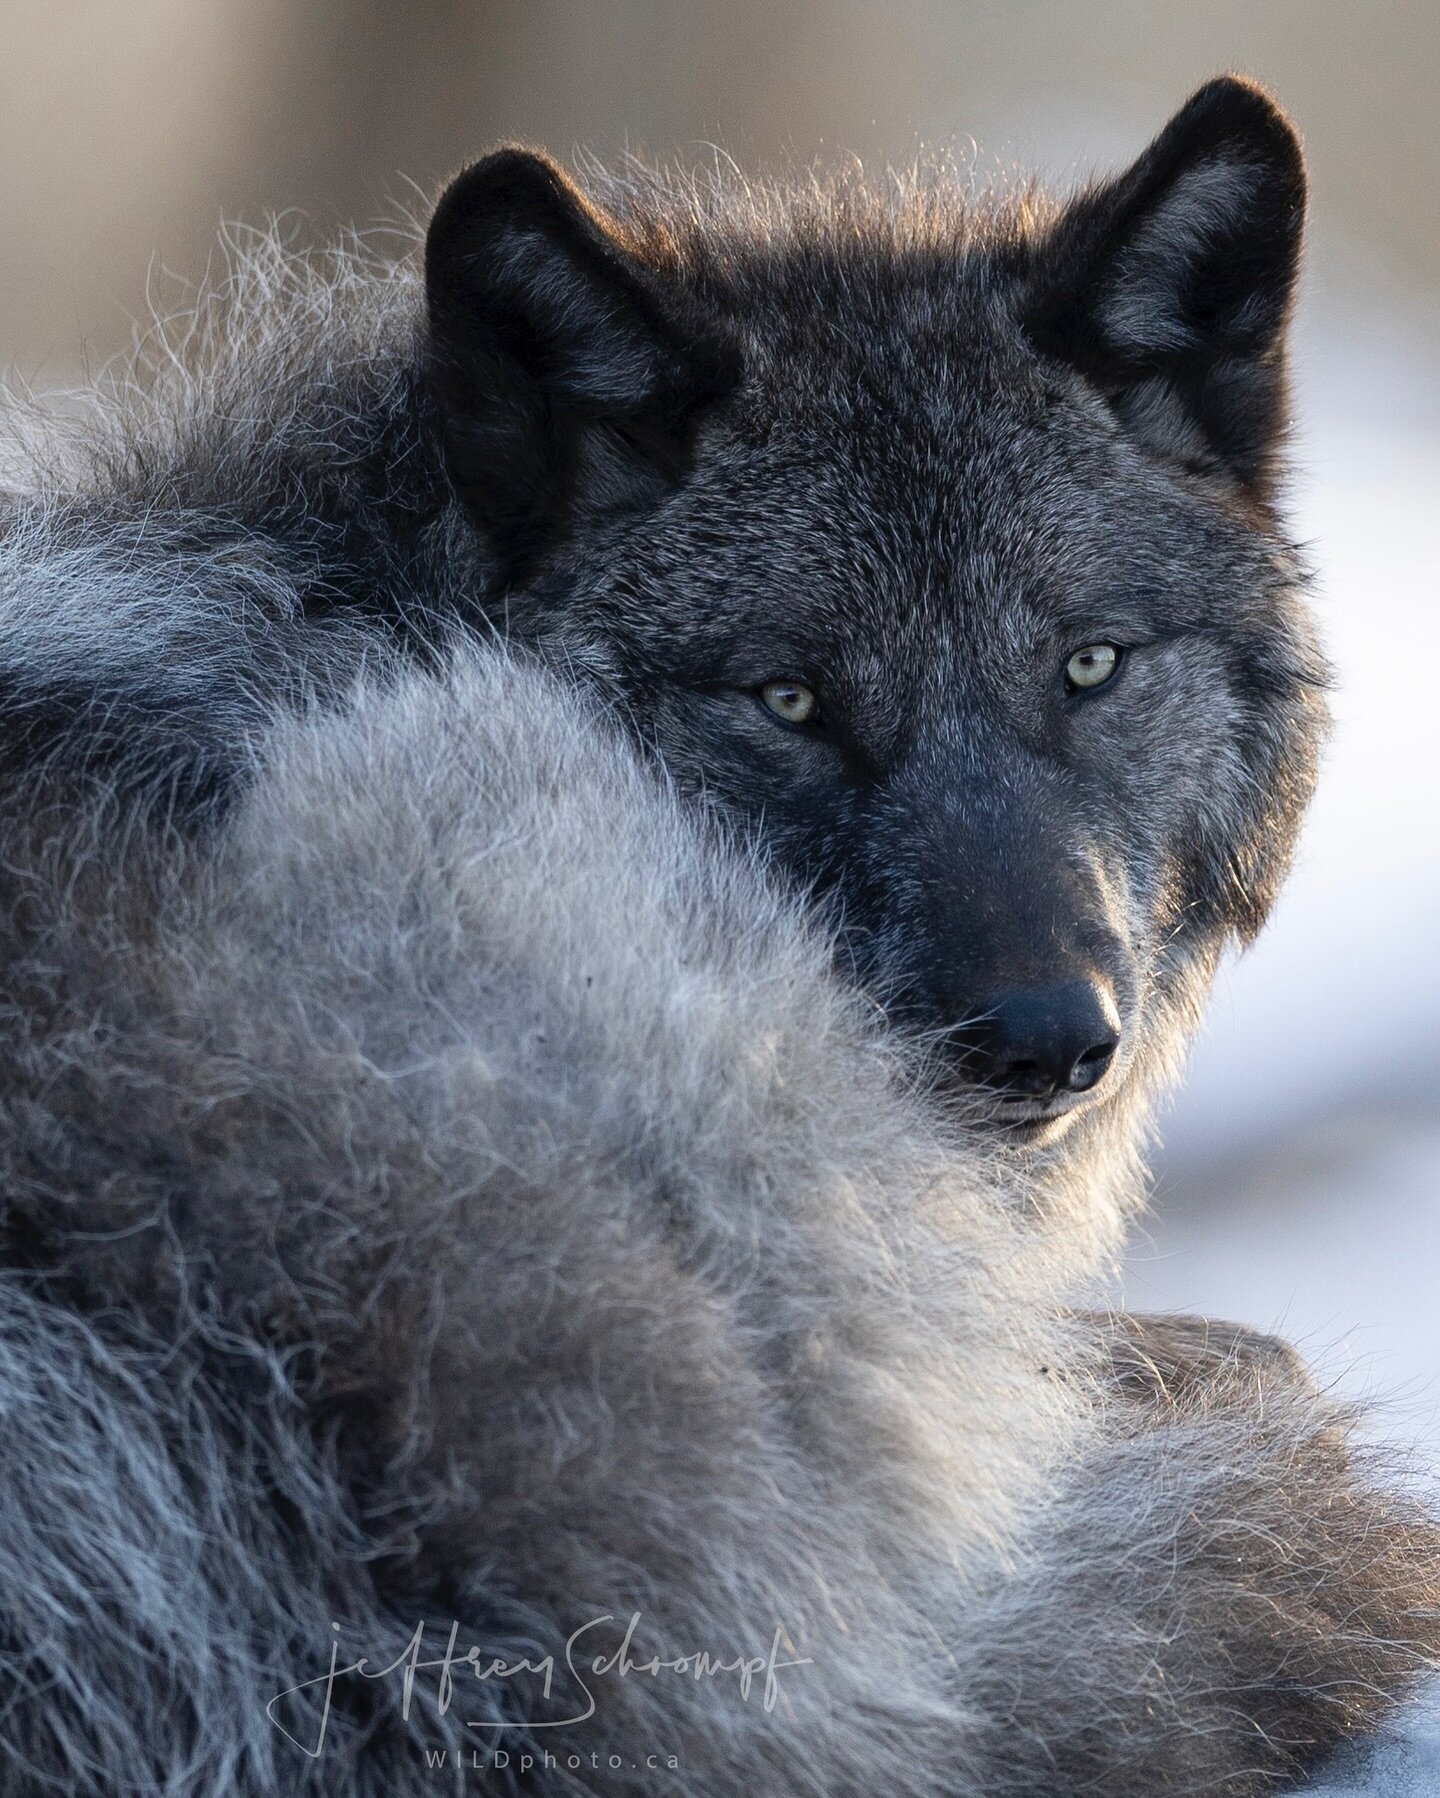 Grey Wolf 🐺 
#greywolf #yellowstone 
&bull;
&bull;
&bull;
#wolf #wolfs #wolflovers #wolflover #wolves #wolvesofinstagram #blackwolf #wolfy #wolfpuppy #wolfdog #wolfdogofinstagram #worldofwolves #wolfdogs #wolfstagram #instawolf #savethewolfves #wolf